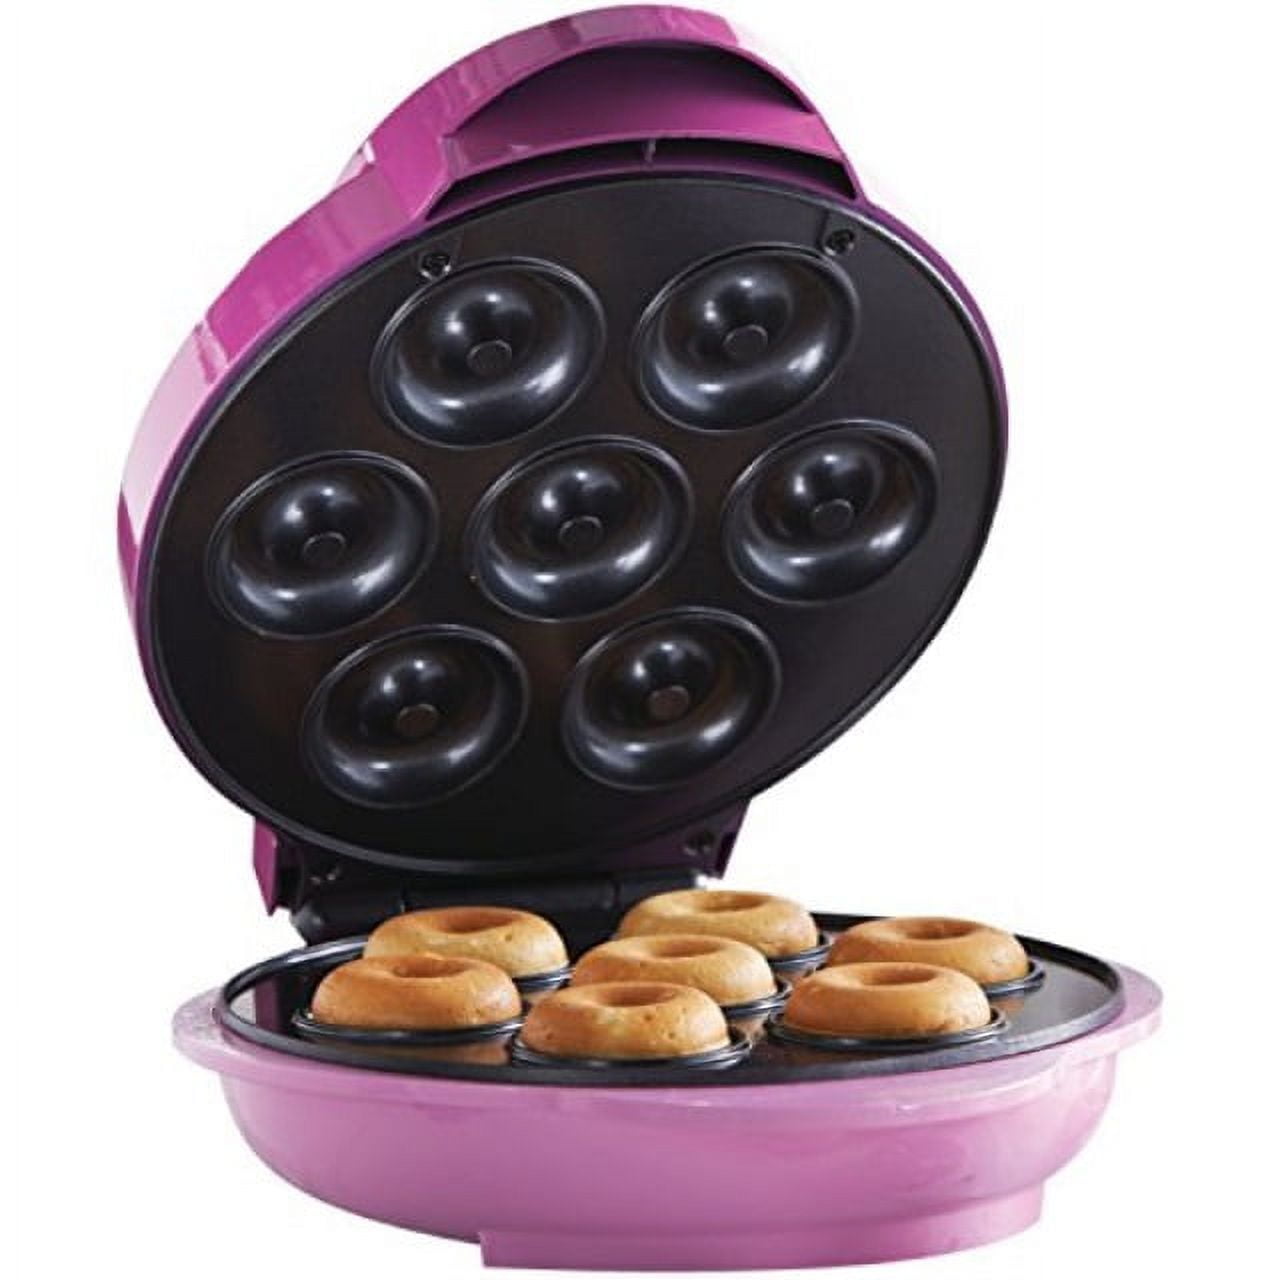 3 holes mini doughnuts donut maker